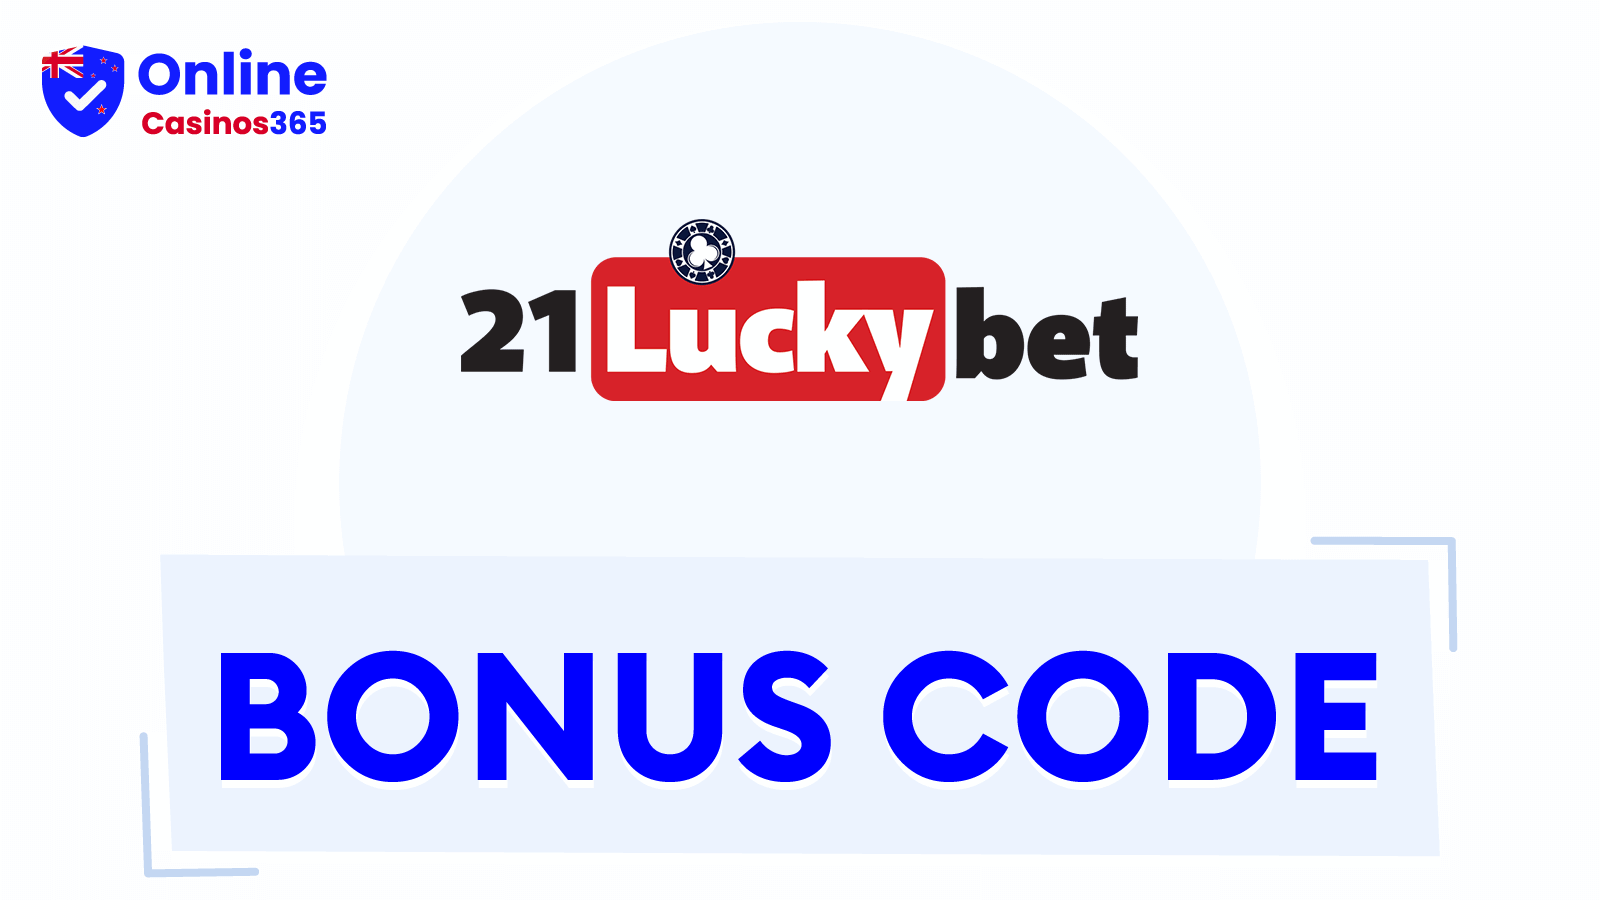 21LuckyBet Casino Bonus Codes